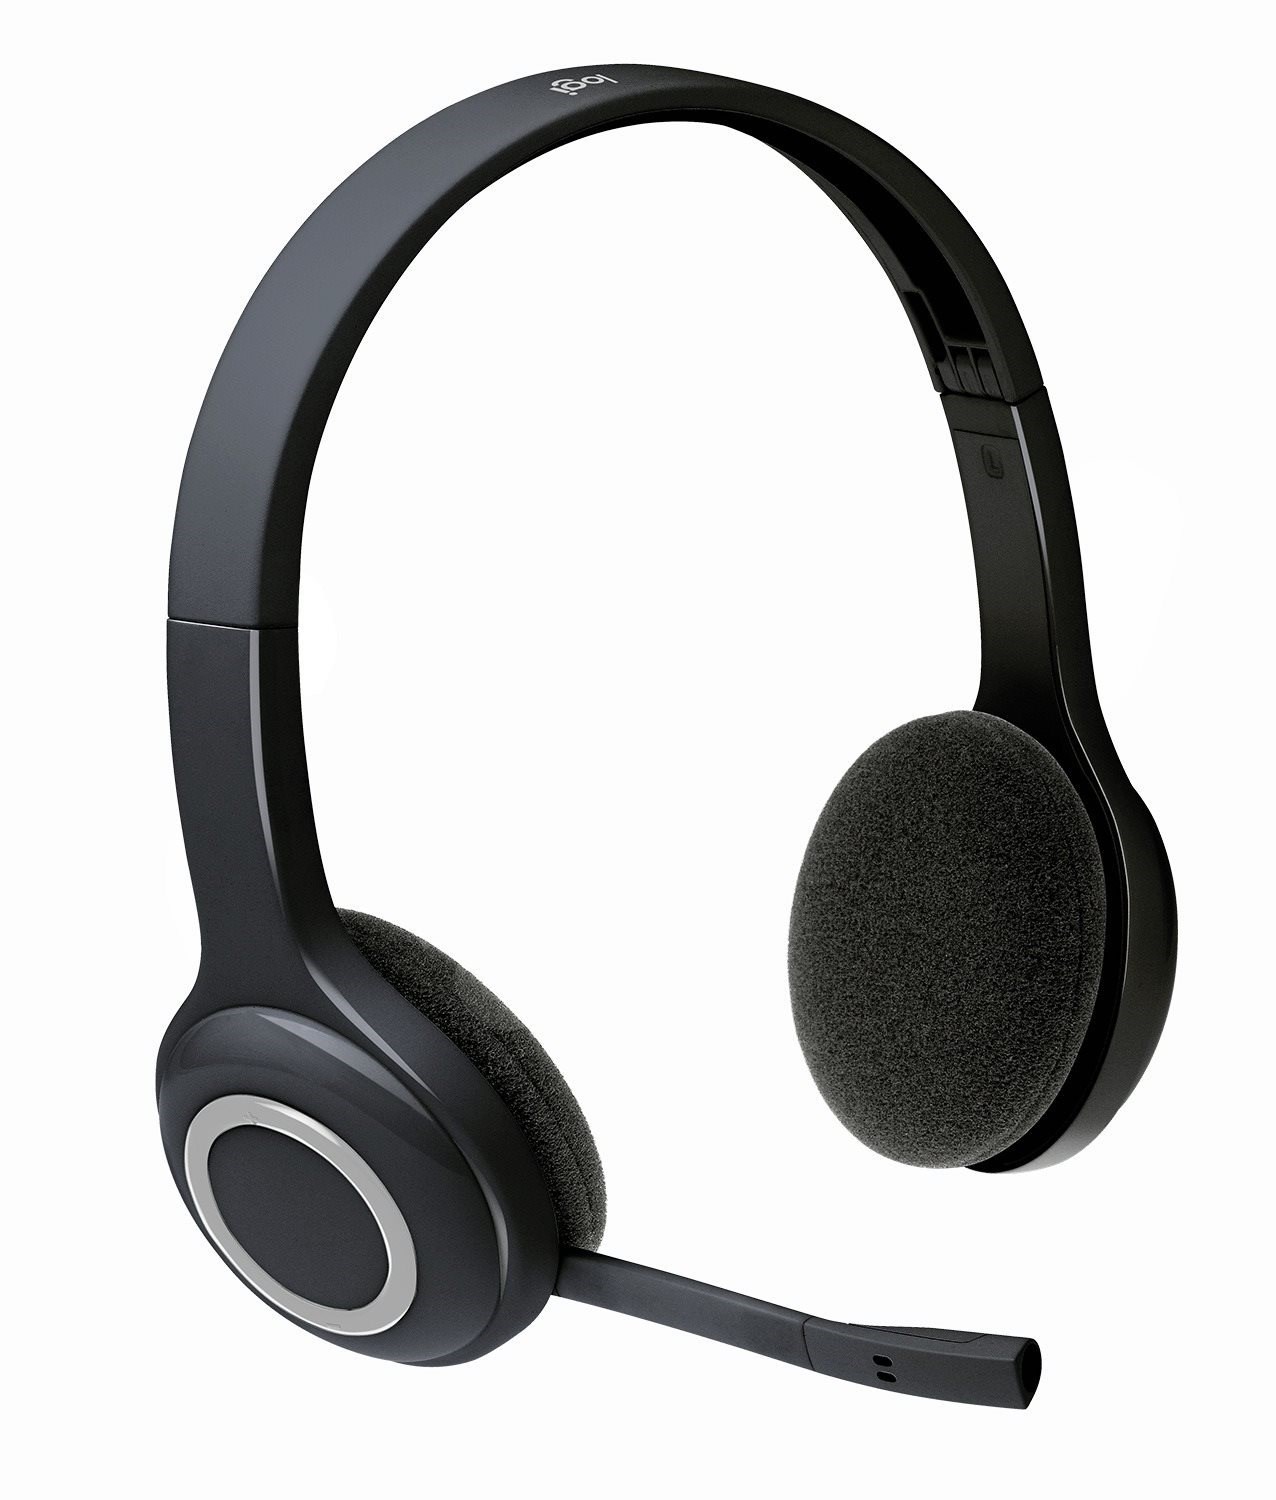 Logitech Wireless Headset H600 - Headphones with Mic ...